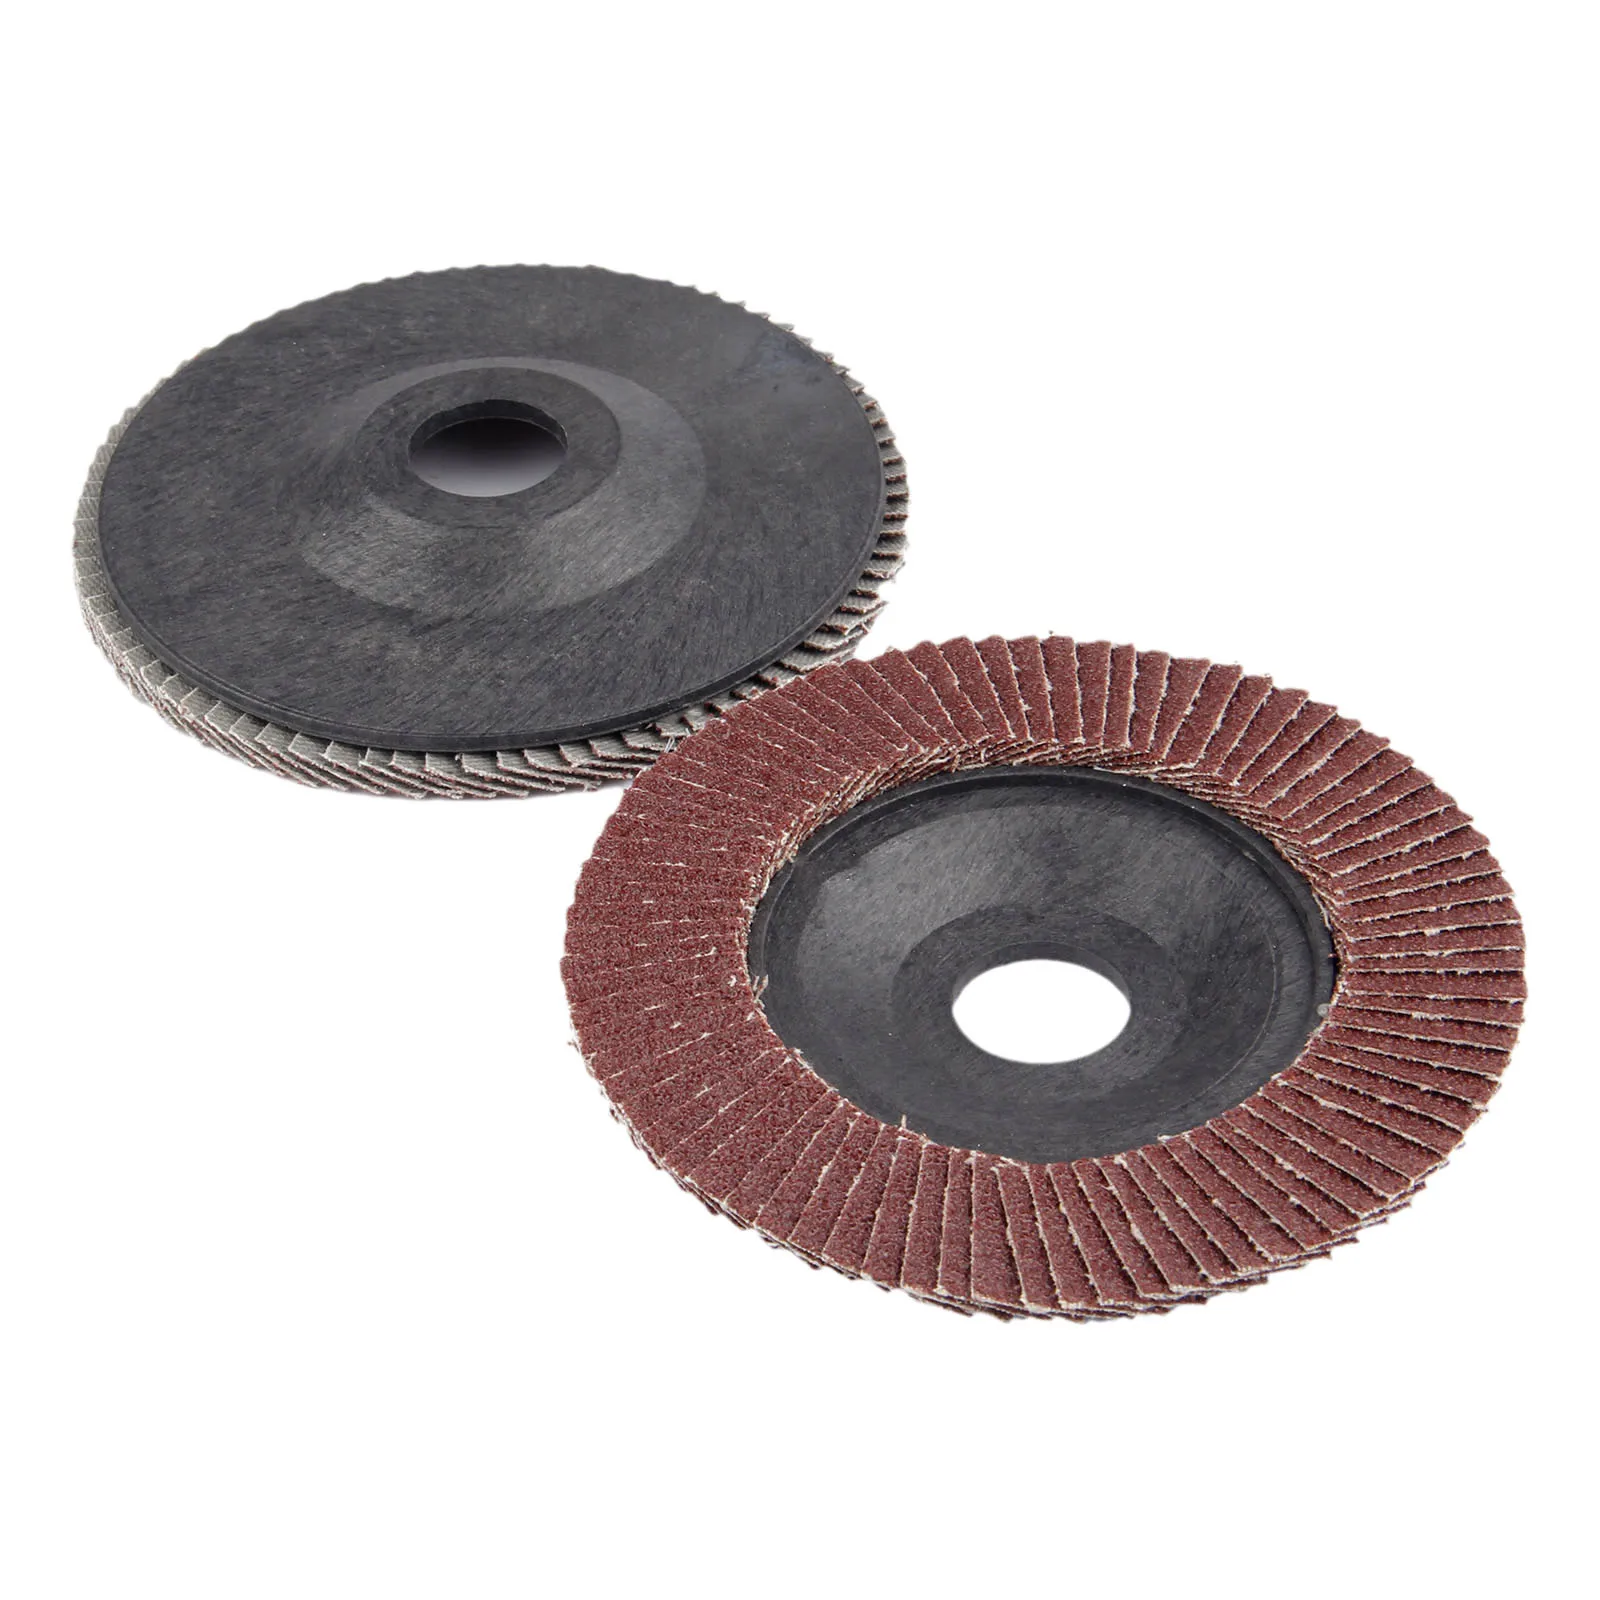 

1Pc 5 Inch Polishing Buffing Pad Sanding Flap Discs 125mm Polishing Grinding Wheel Grit 60 for Angle Grinder Dremel Rotary Tool